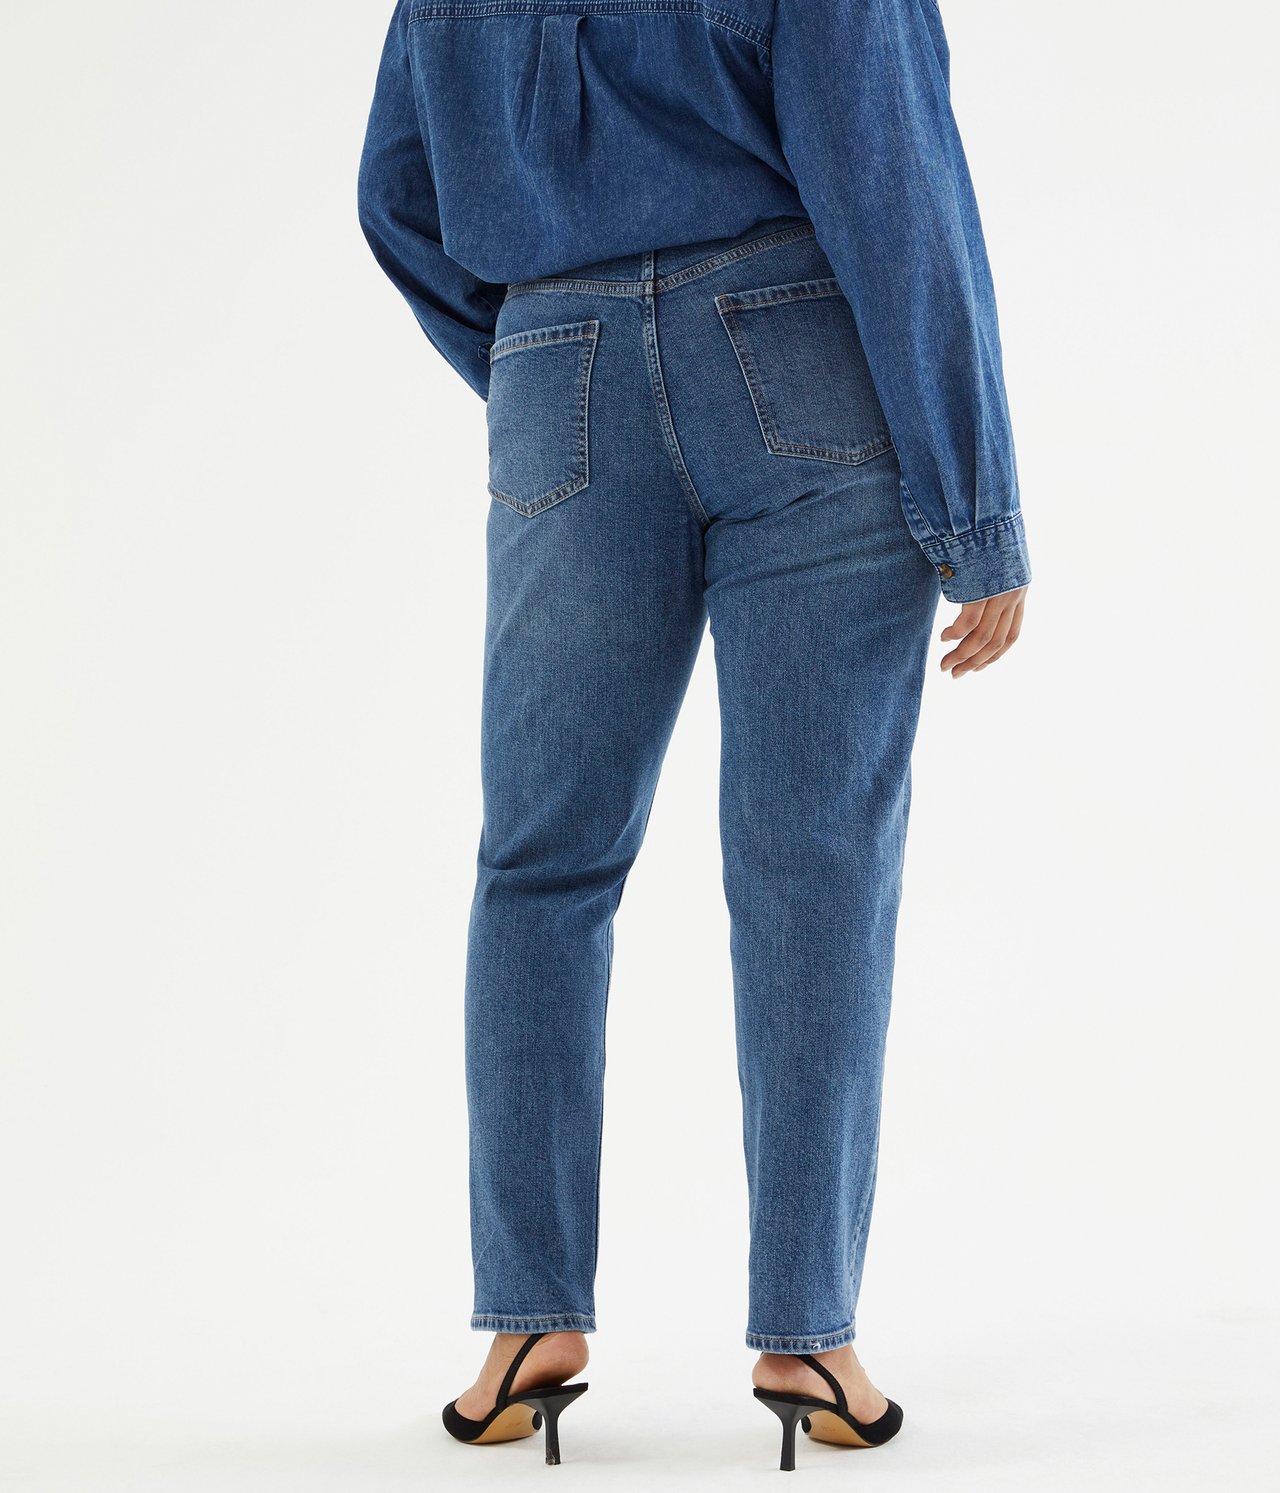 Jeans high waist tapered - Denim - 5